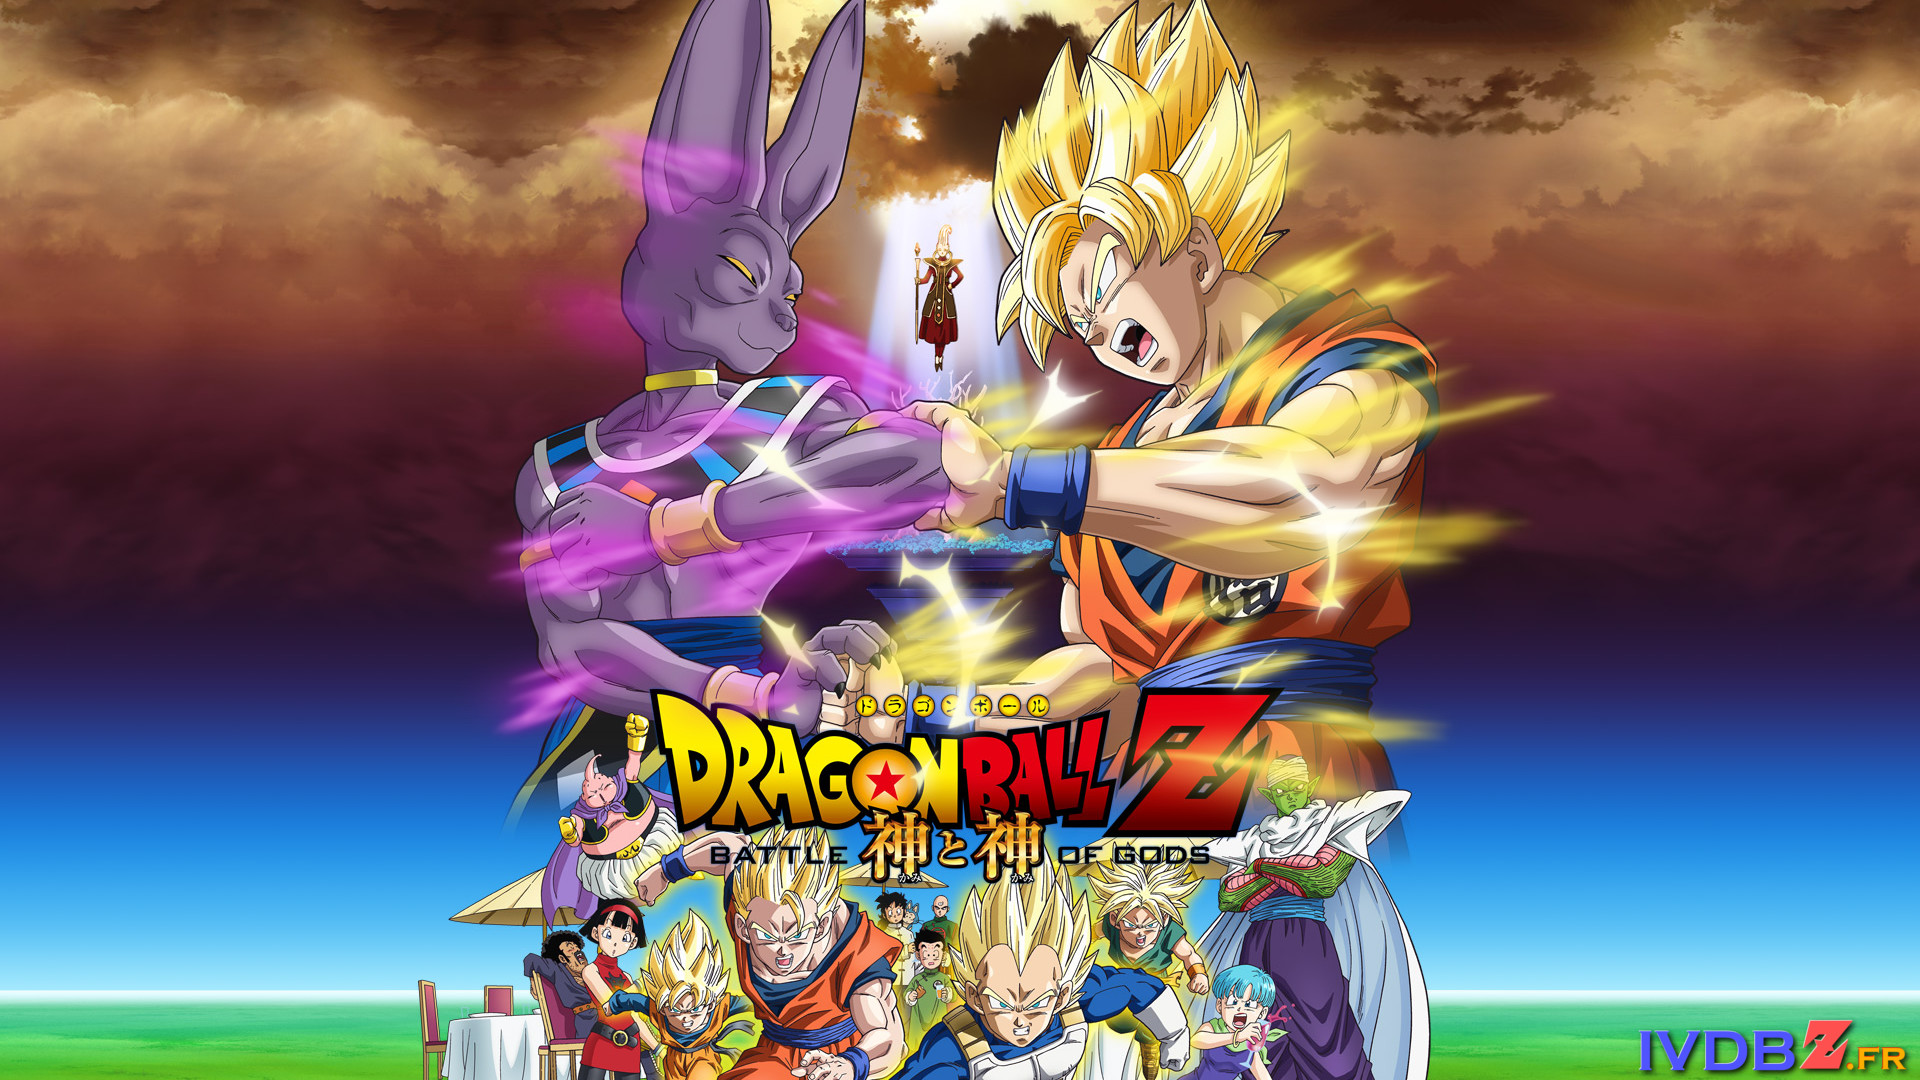 4 Dragon Ball Z: Battle of Gods HD Wallpapers | Backgrounds – Wallpaper  Abyss